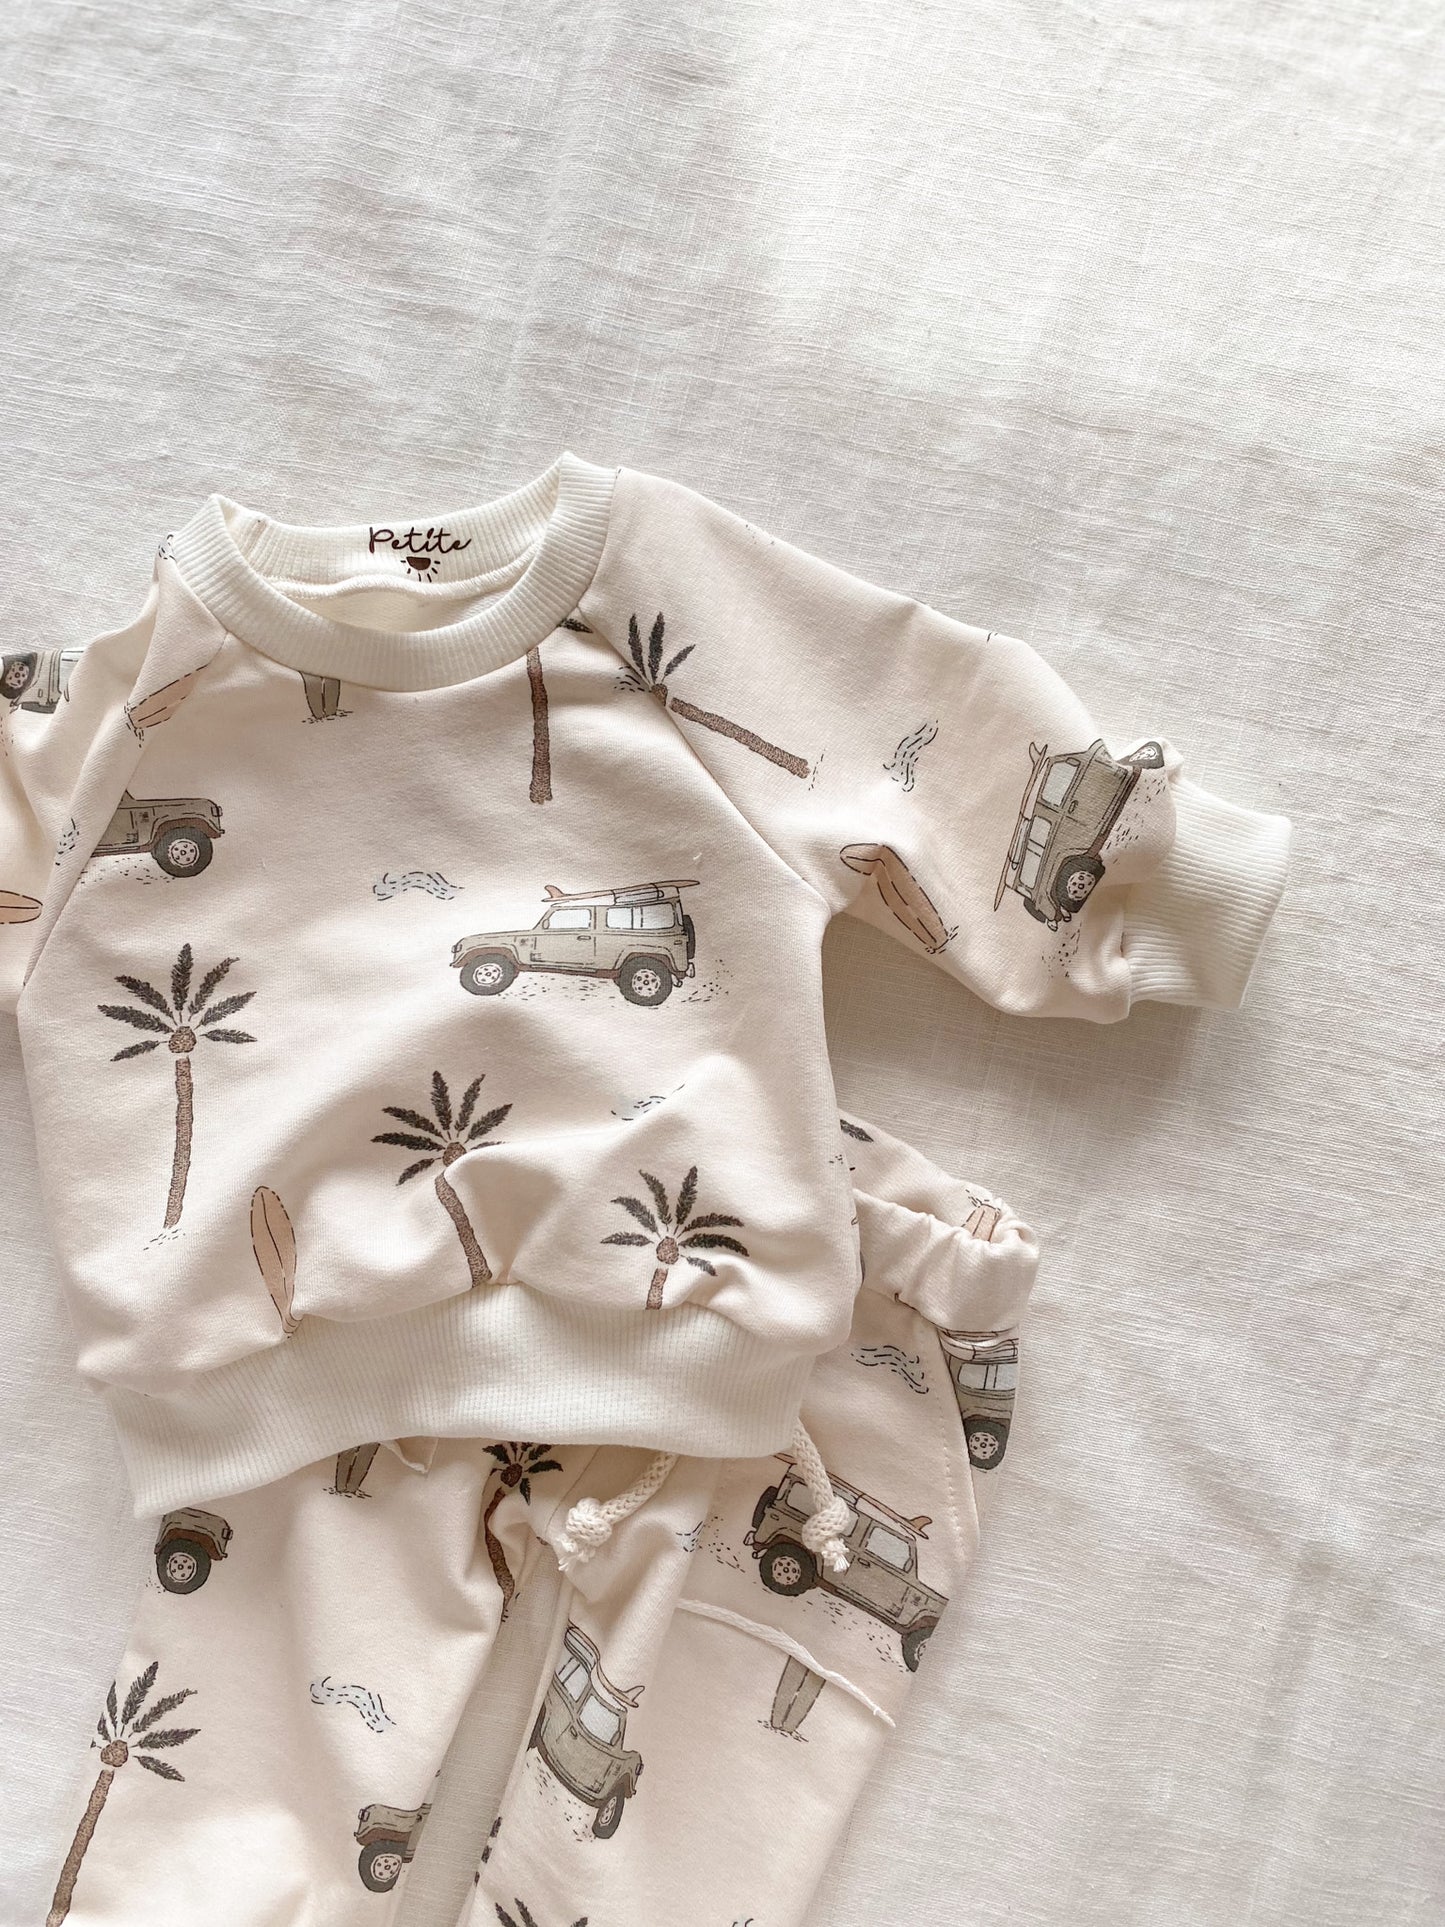 Baby cotton sweatshirt / cars & palm trees